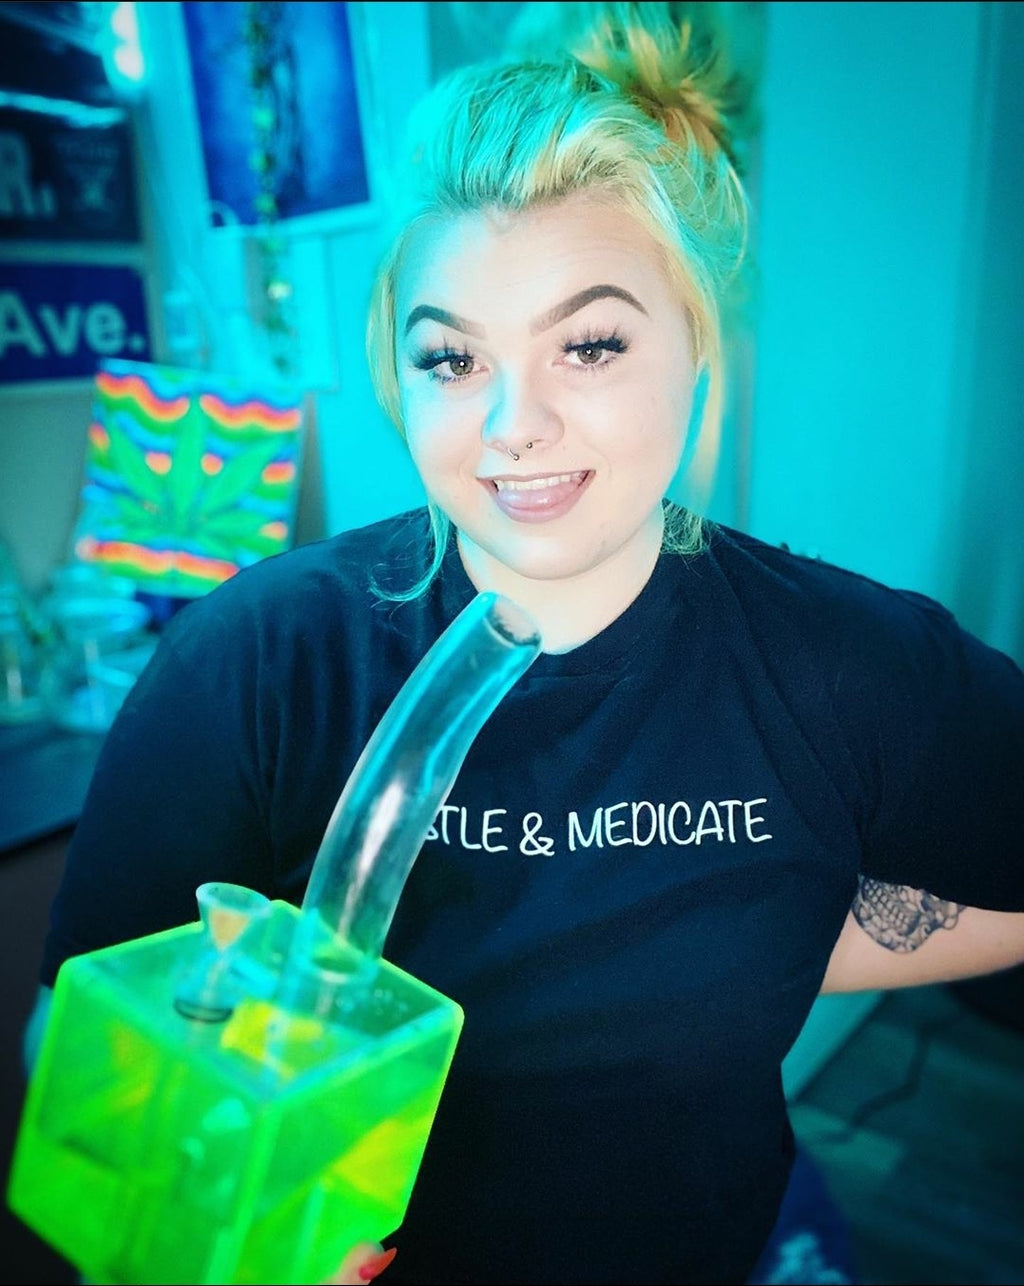 Hustle & Medicate T-Shirt